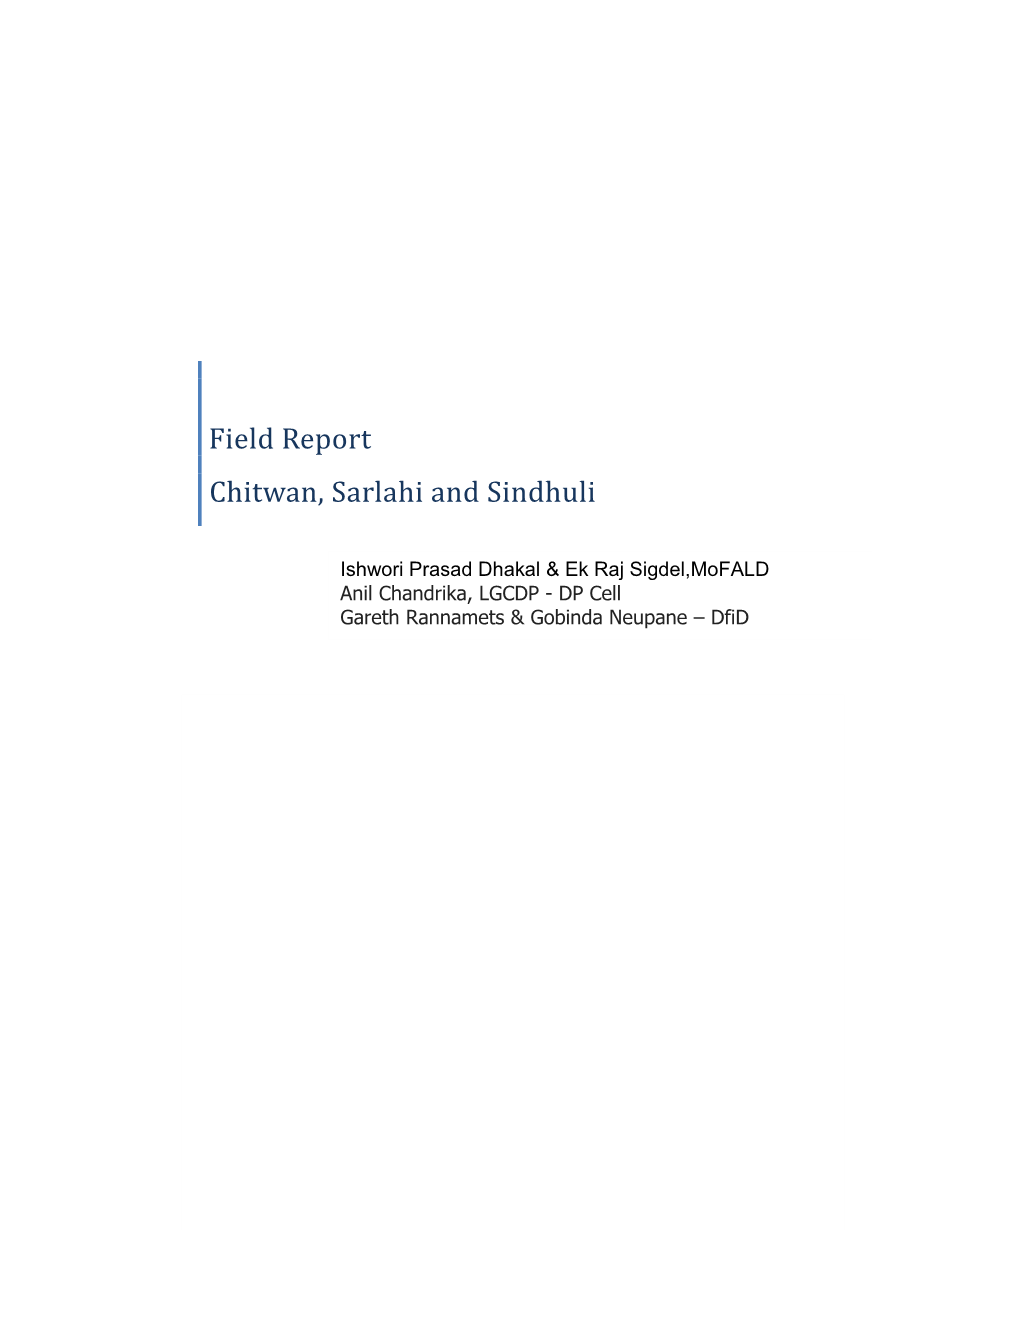 Field Report Chitwan, Sarlahi and Sindhuli